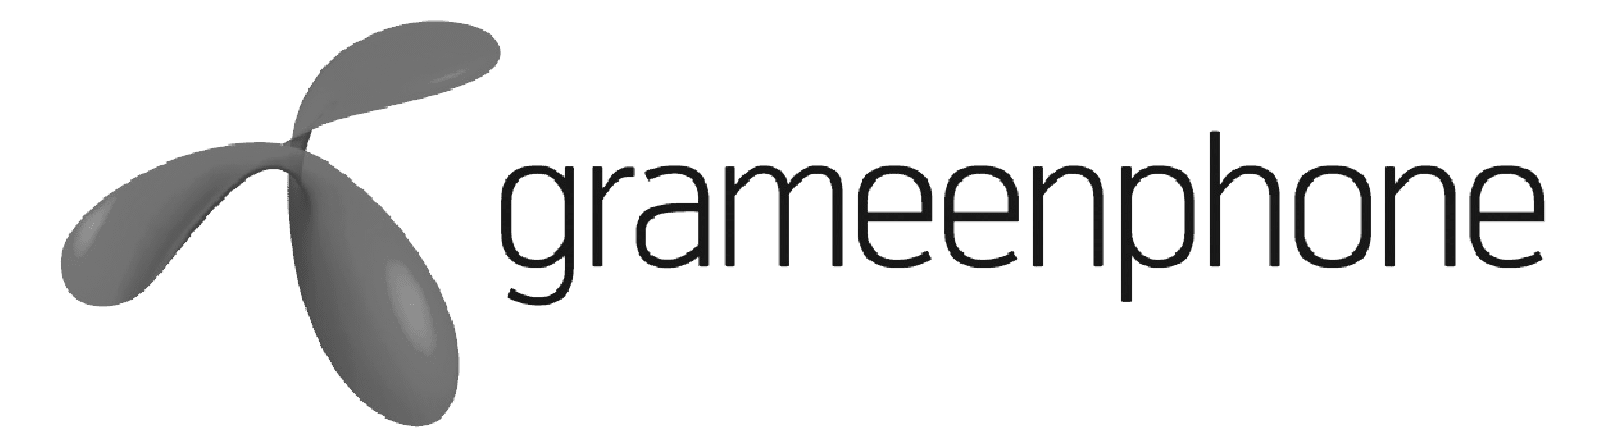 grameenphone logo